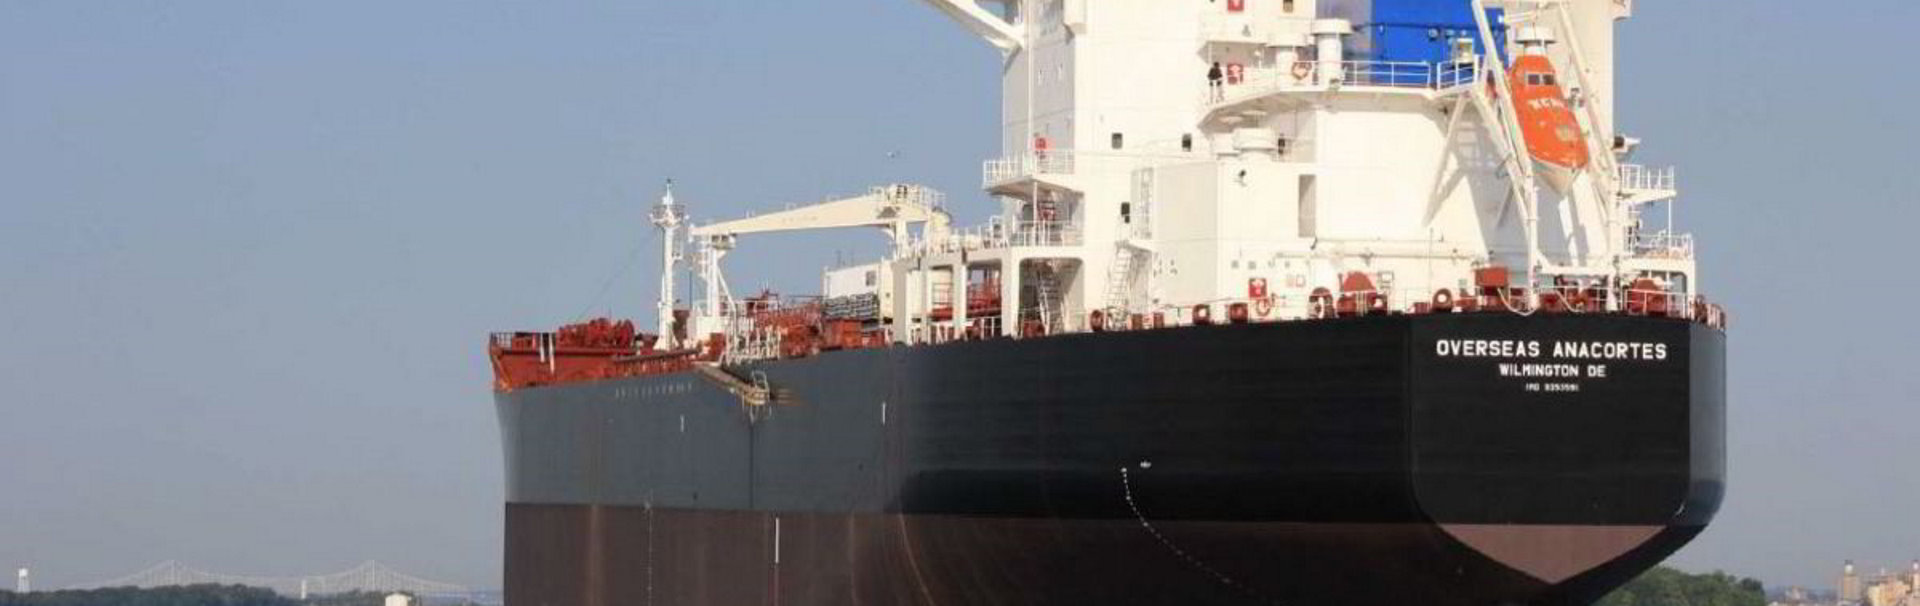 Overseas Anacortes oil tanker; Source: OSG